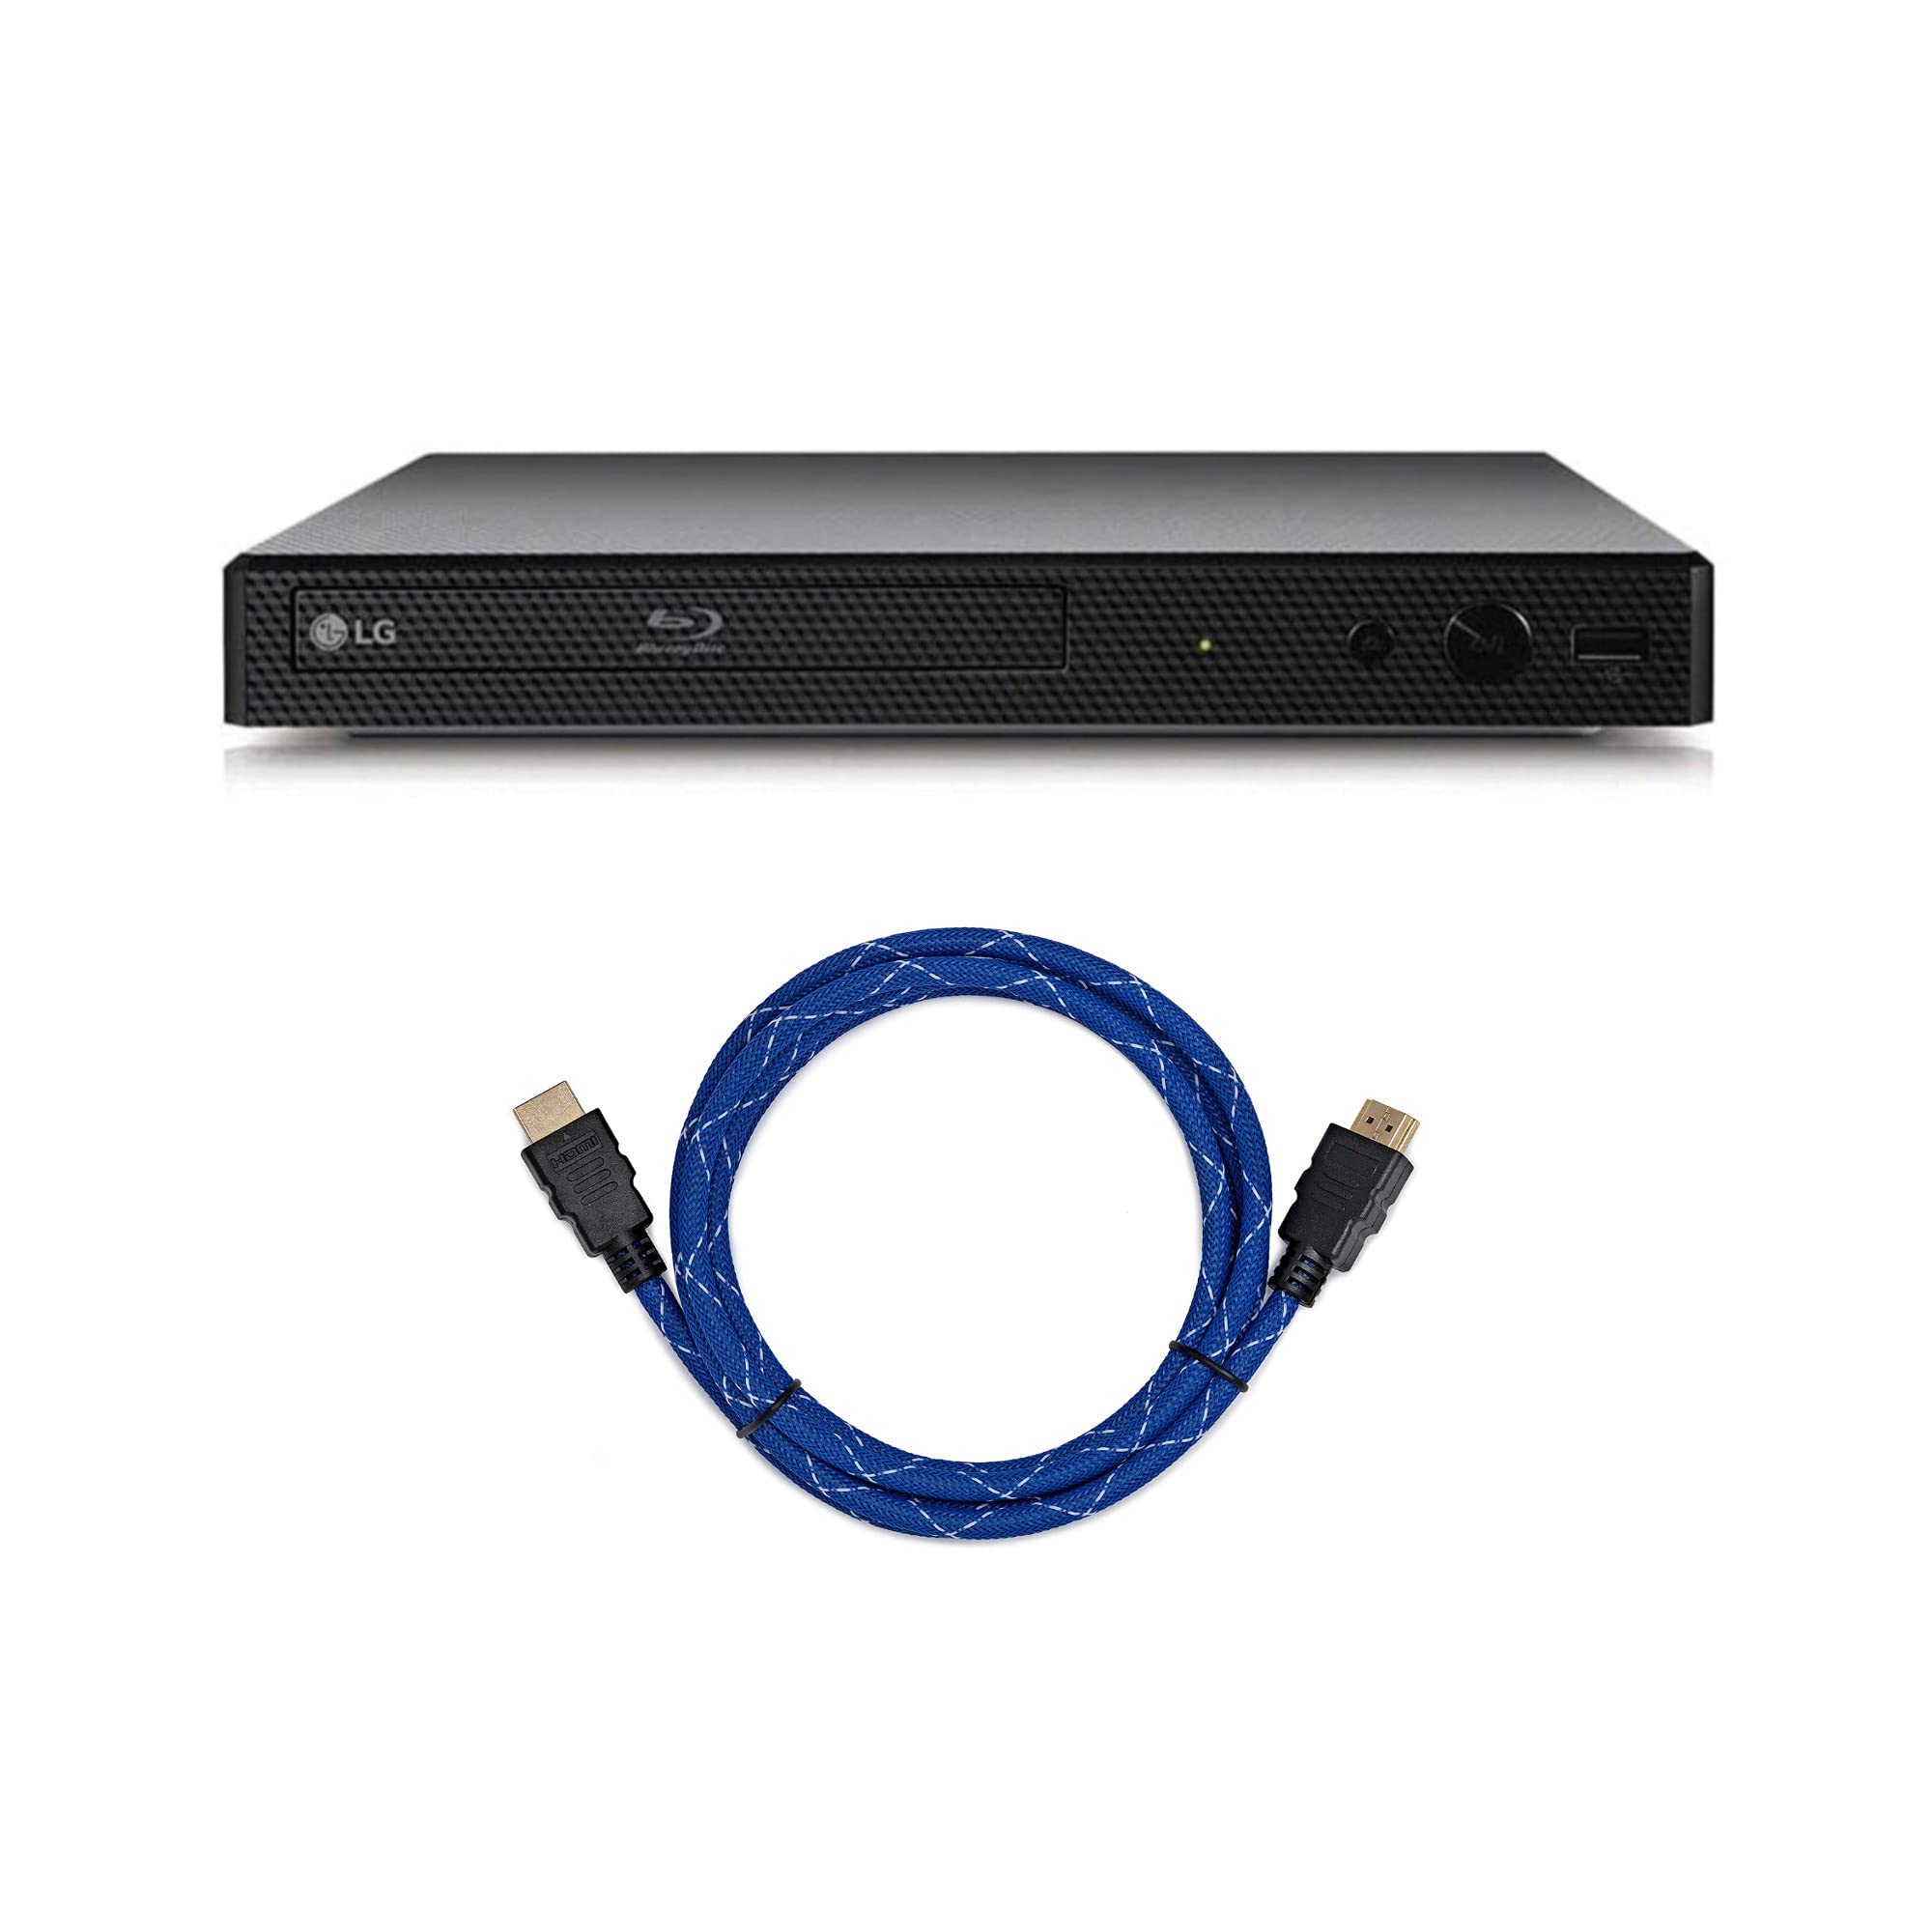 LG BP175 Blu-Ray DVD プレーヤー、HDMI ポートバンドル付き (6 フィート HDMI ケーブル付属)